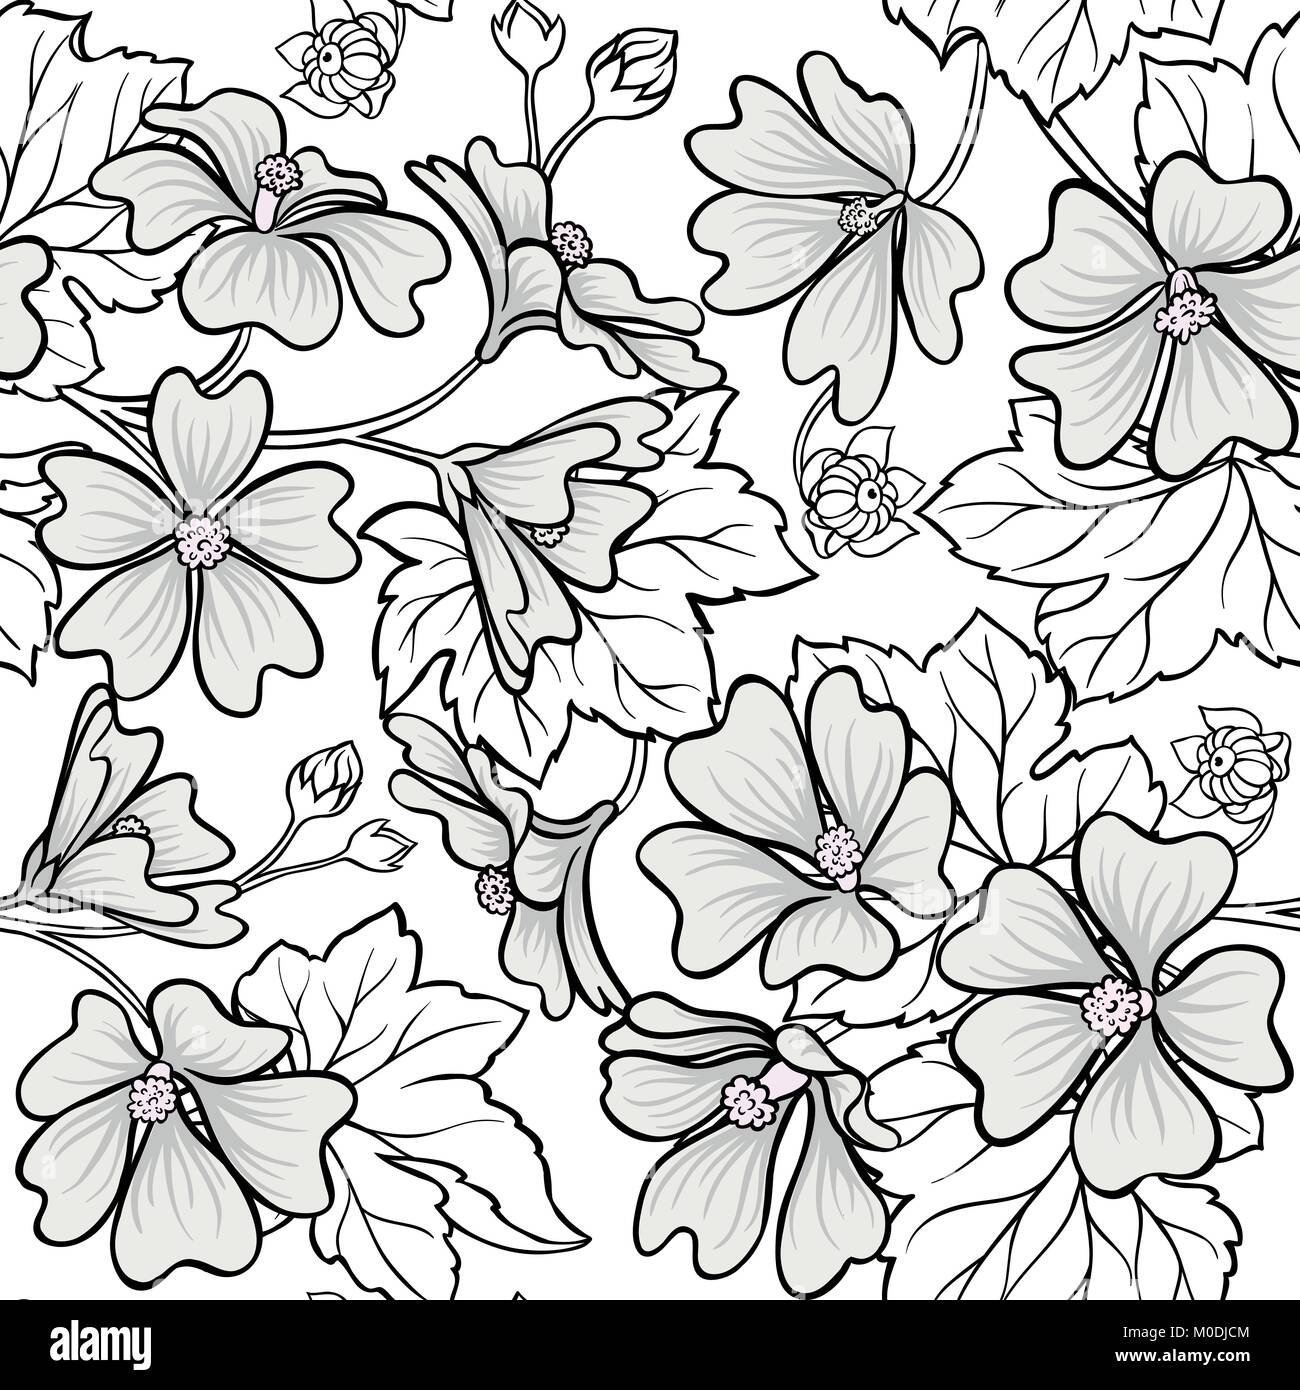 malva plant seamless pattern on white background Stock Vector